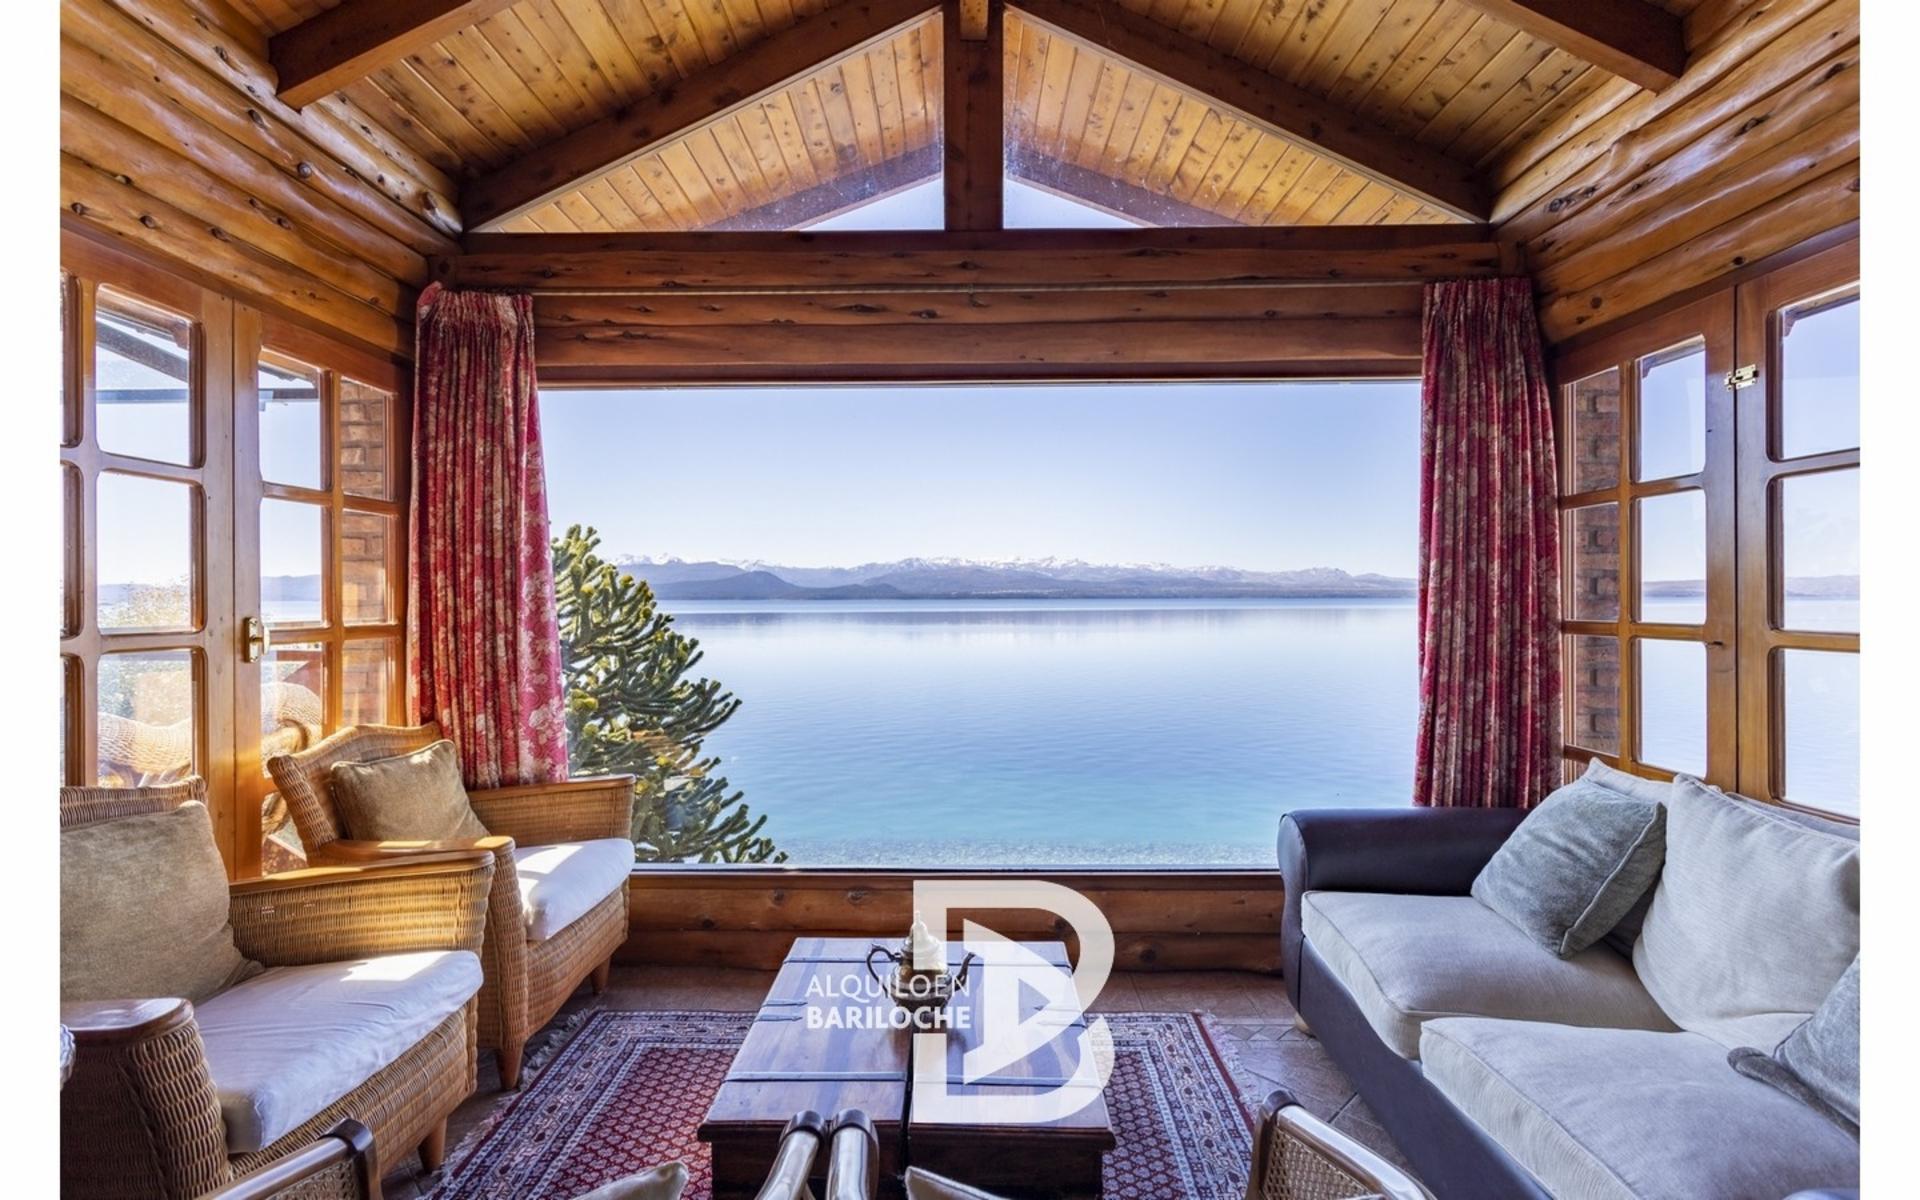 Alquiler Casa en Bariloche con Costa de Lago Nahuel Huapi. 10 PAX. Km5.